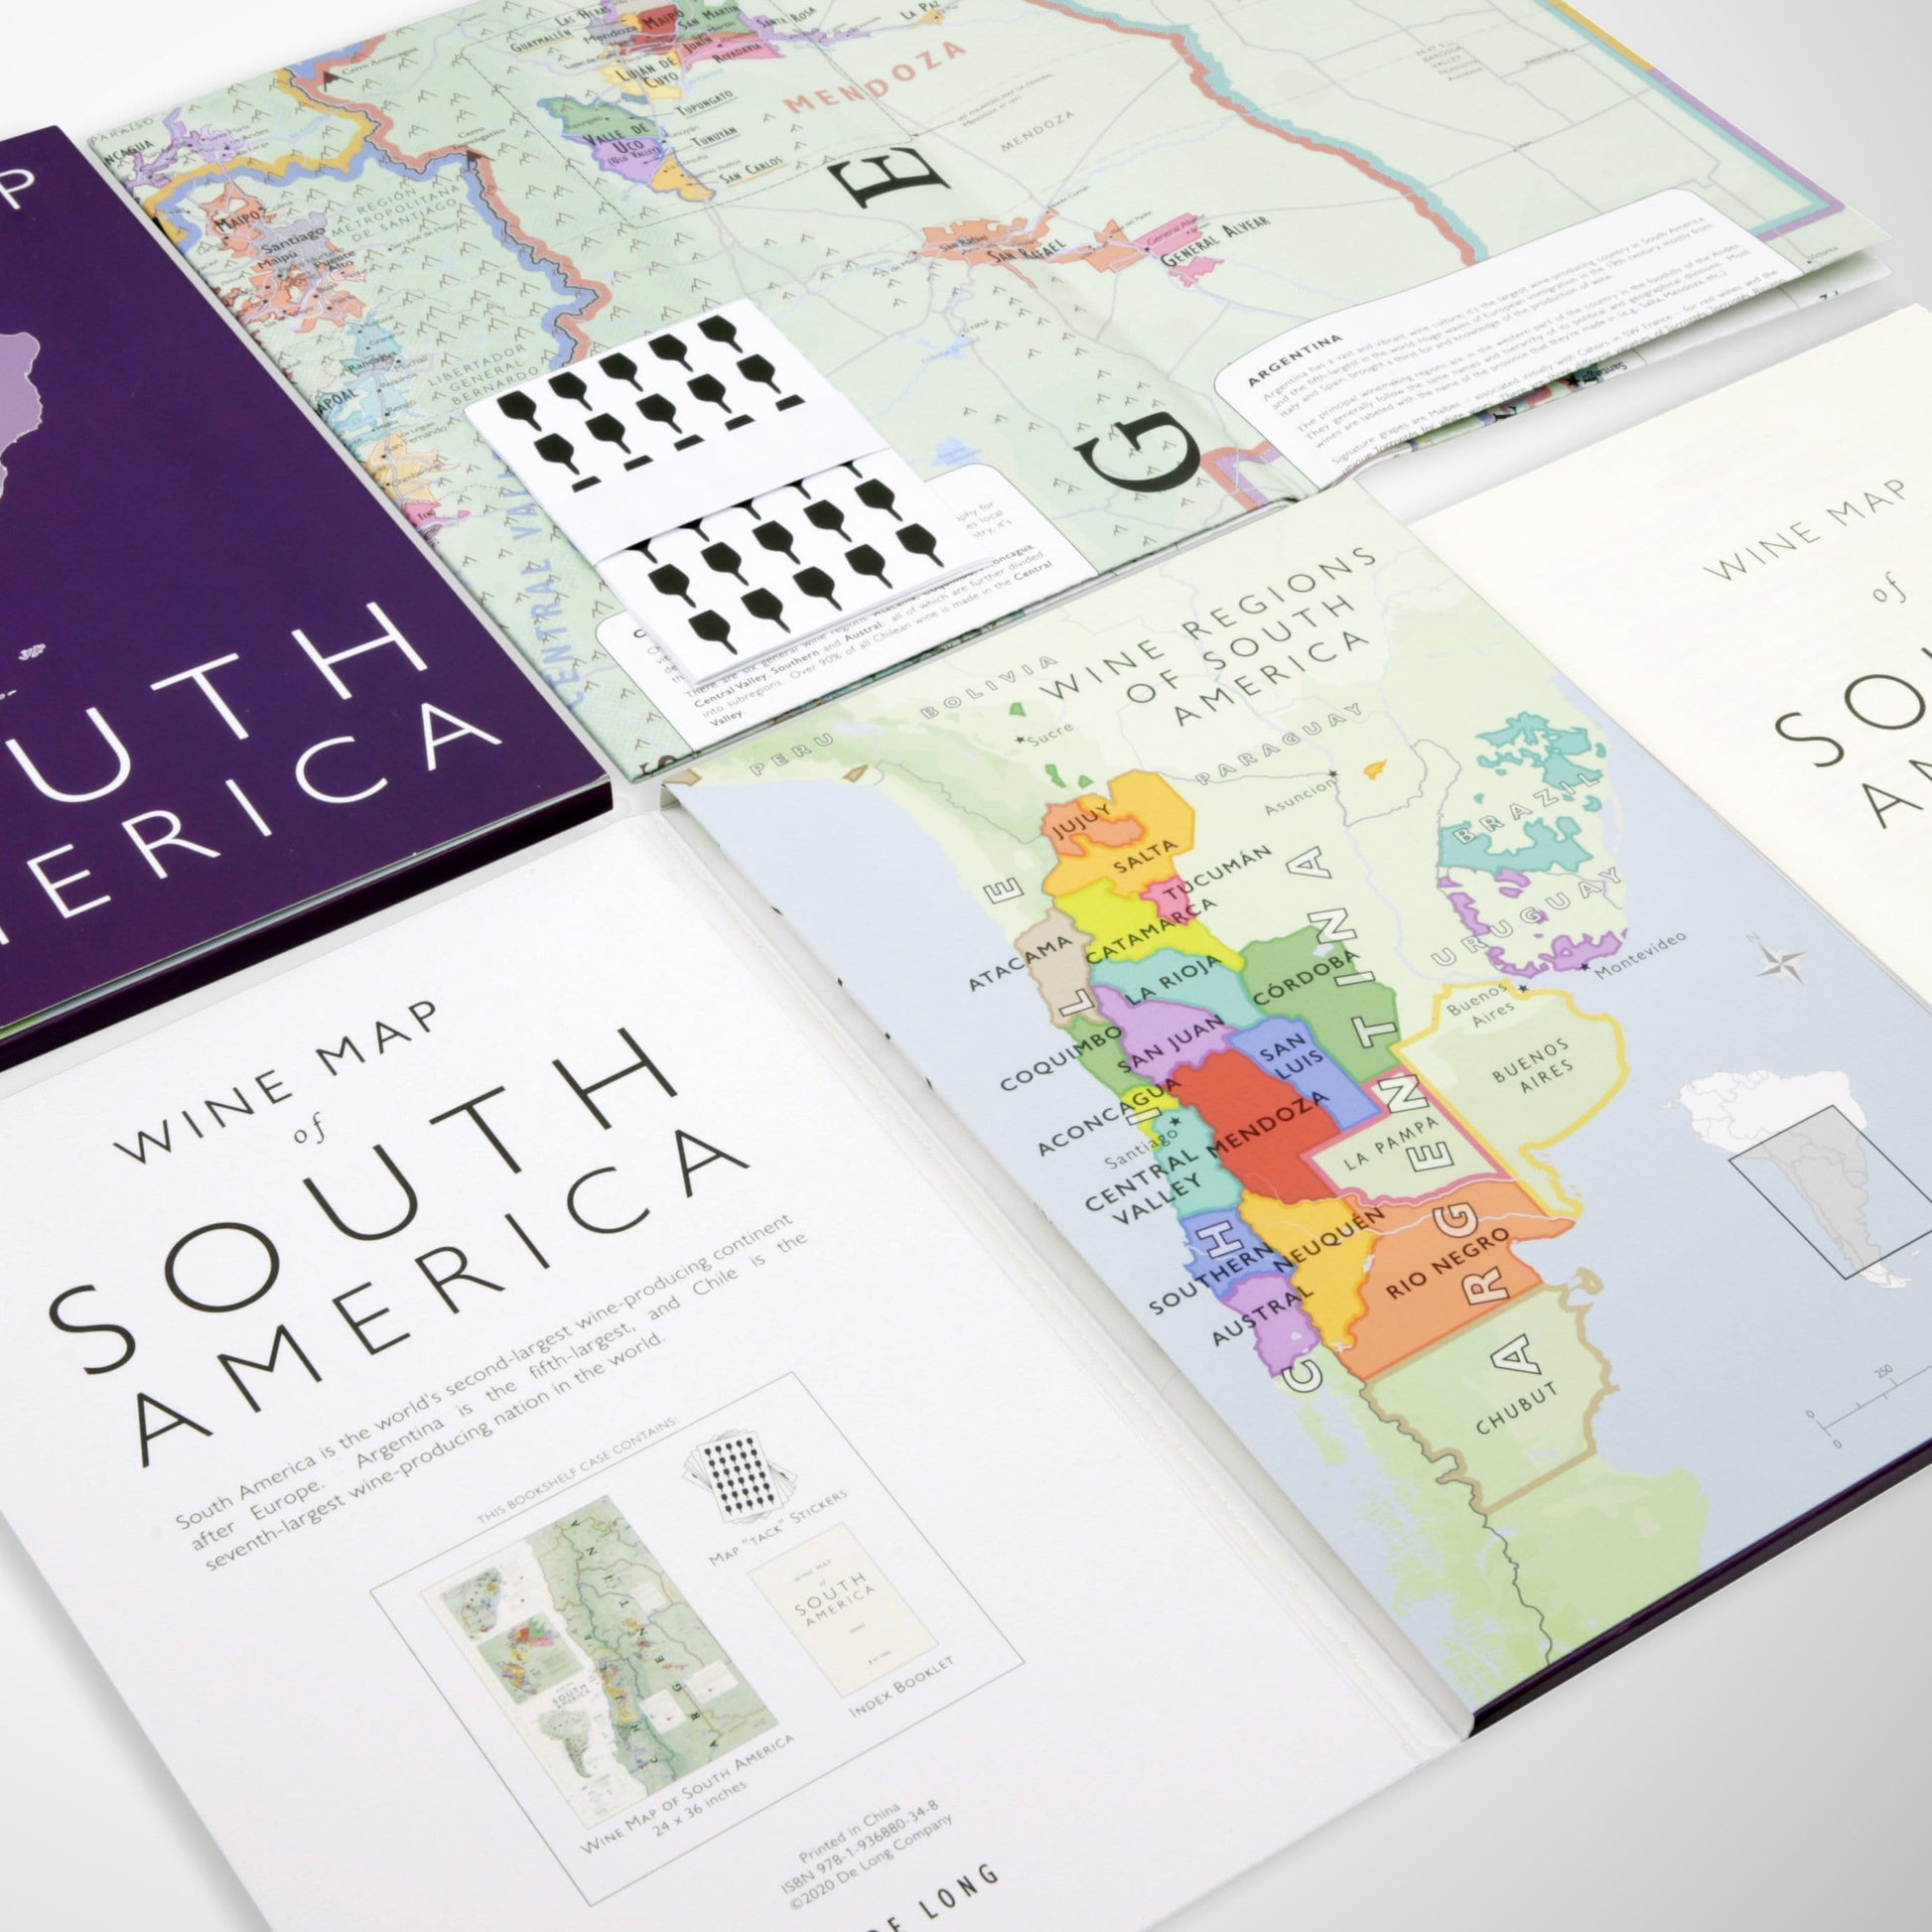 Wine Map of South America Bookshelf Edition Open